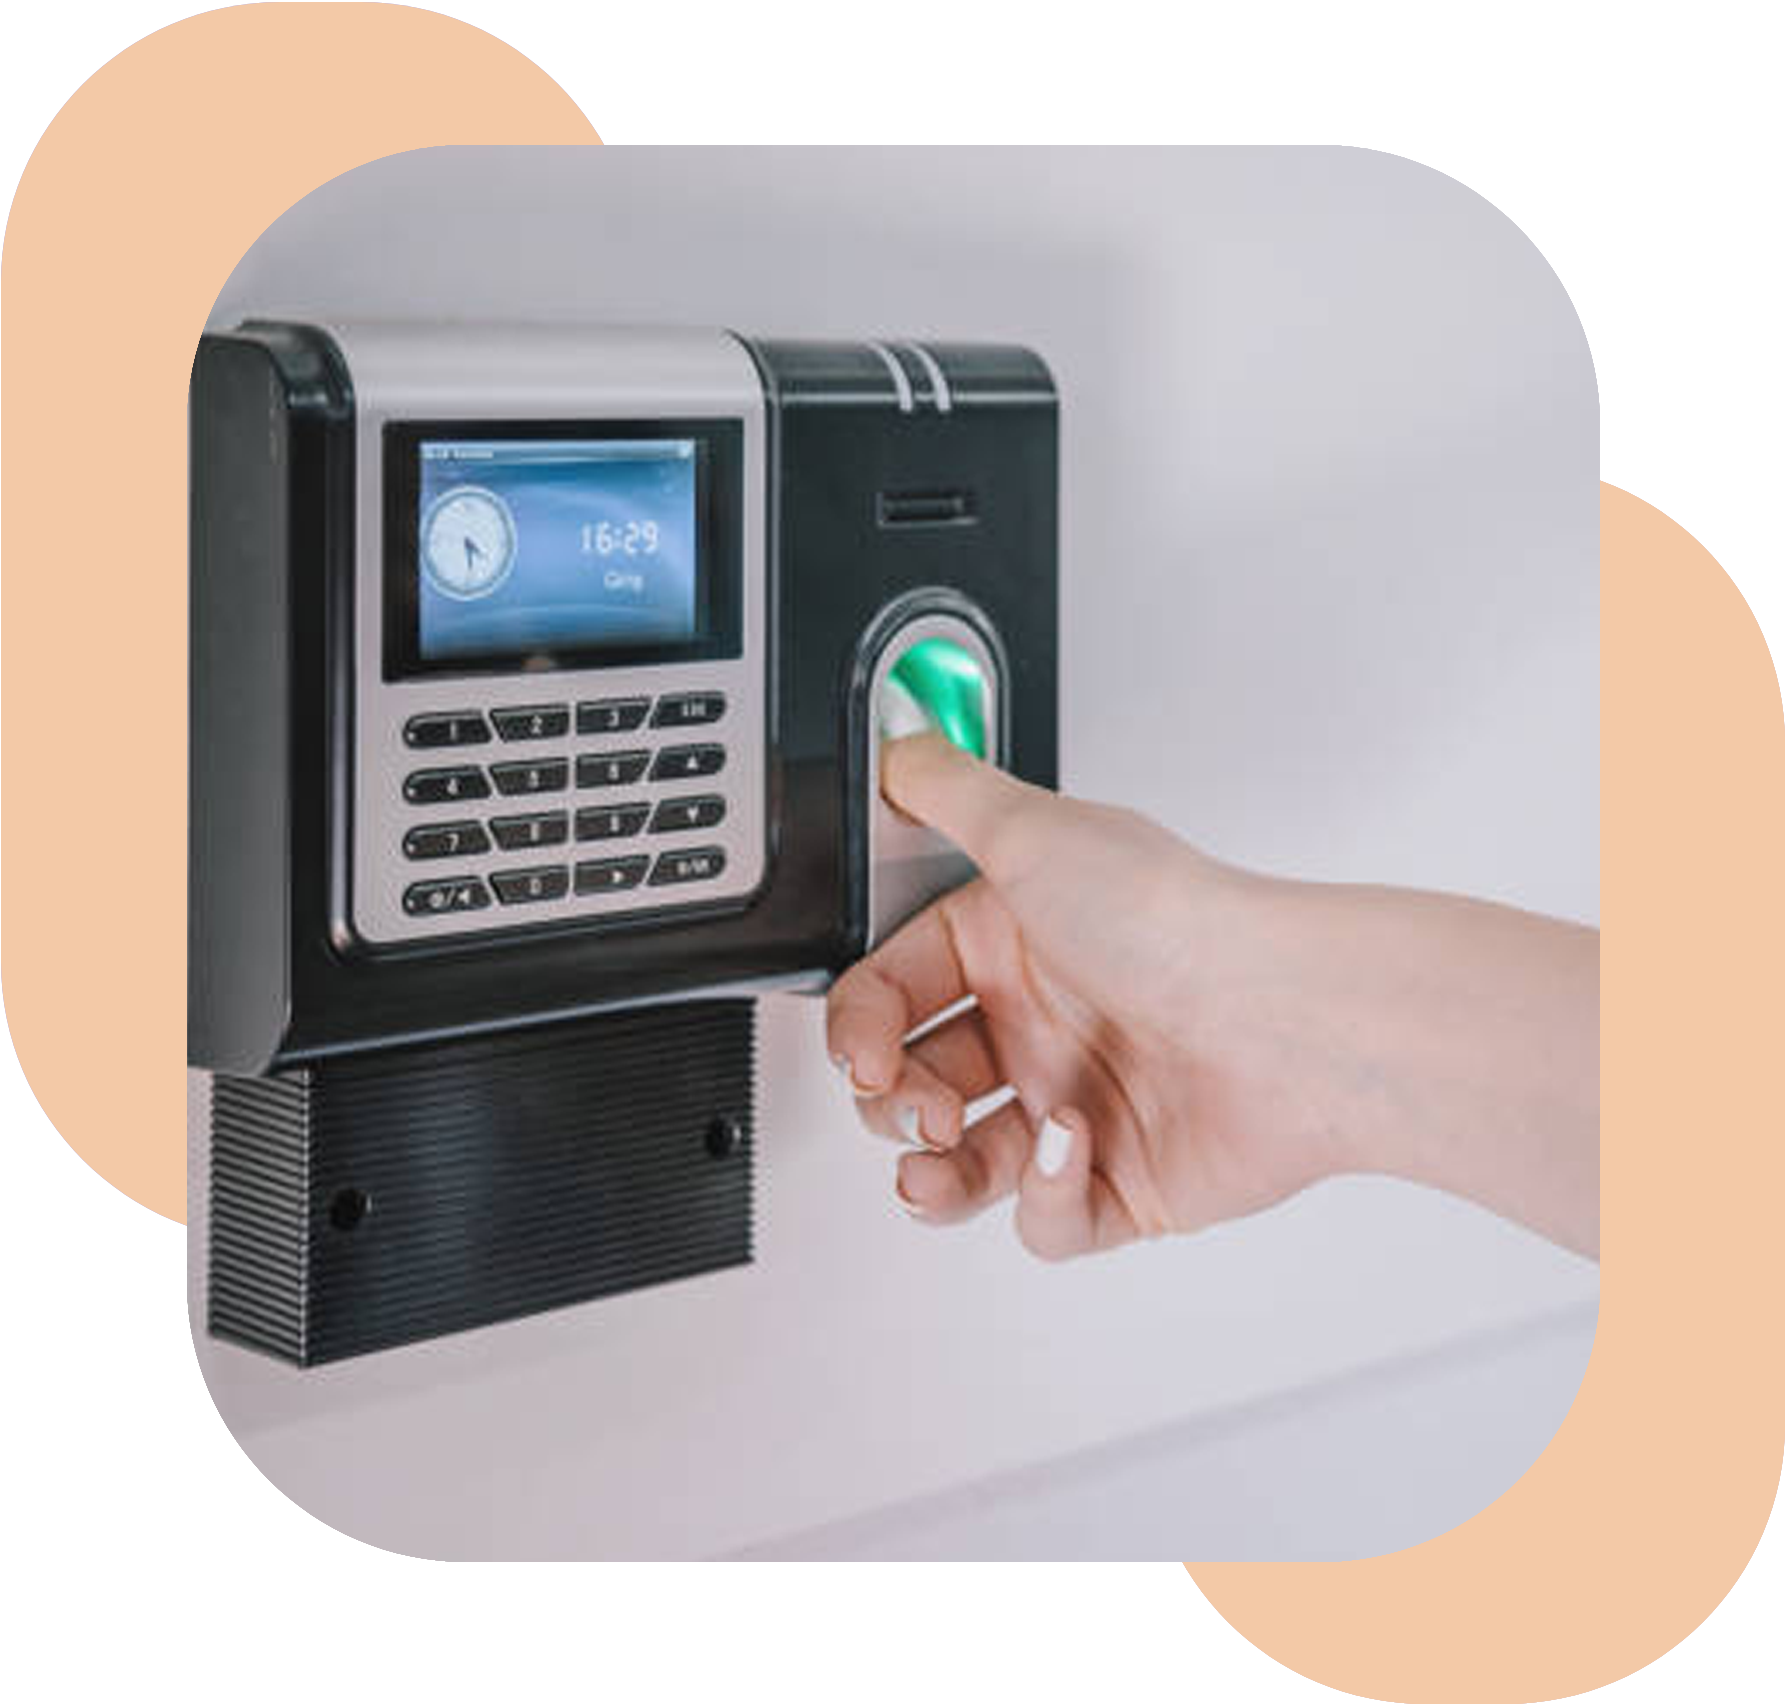 Thumb-based Biometric